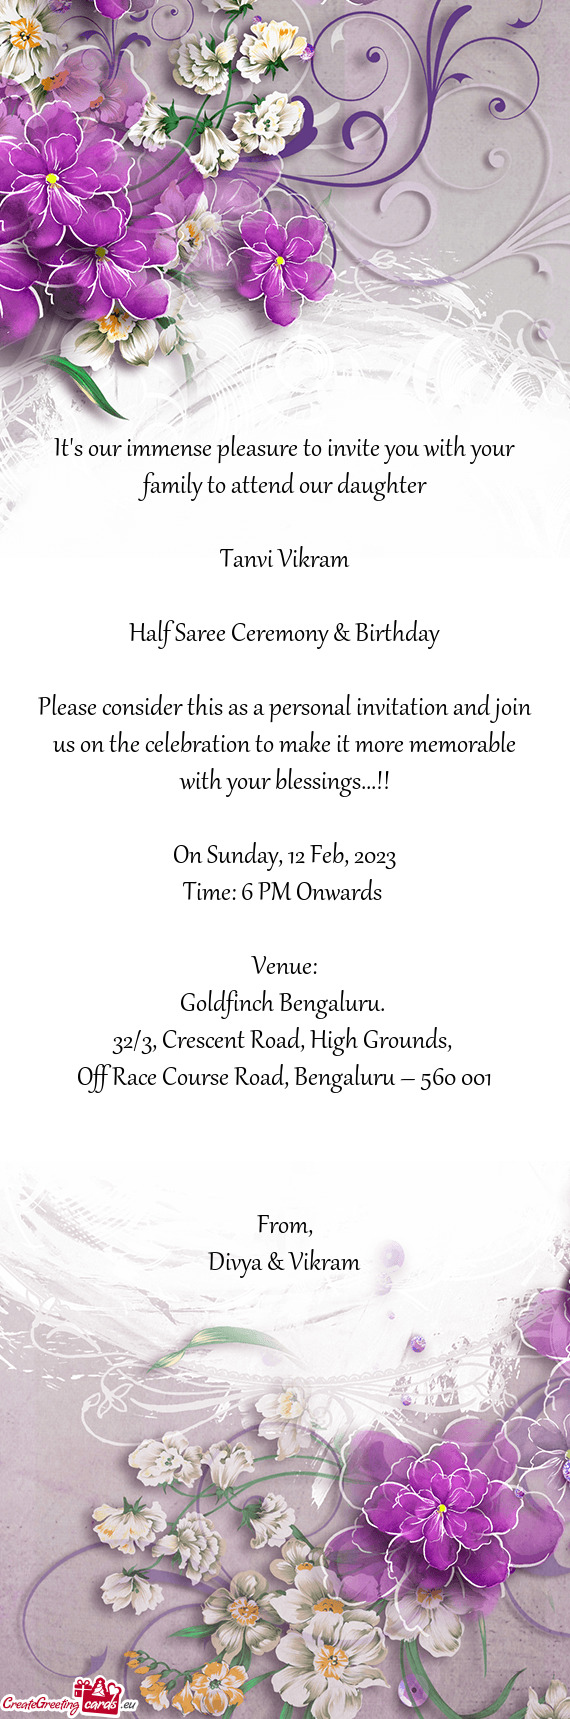 Half Saree Ceremony & Birthday